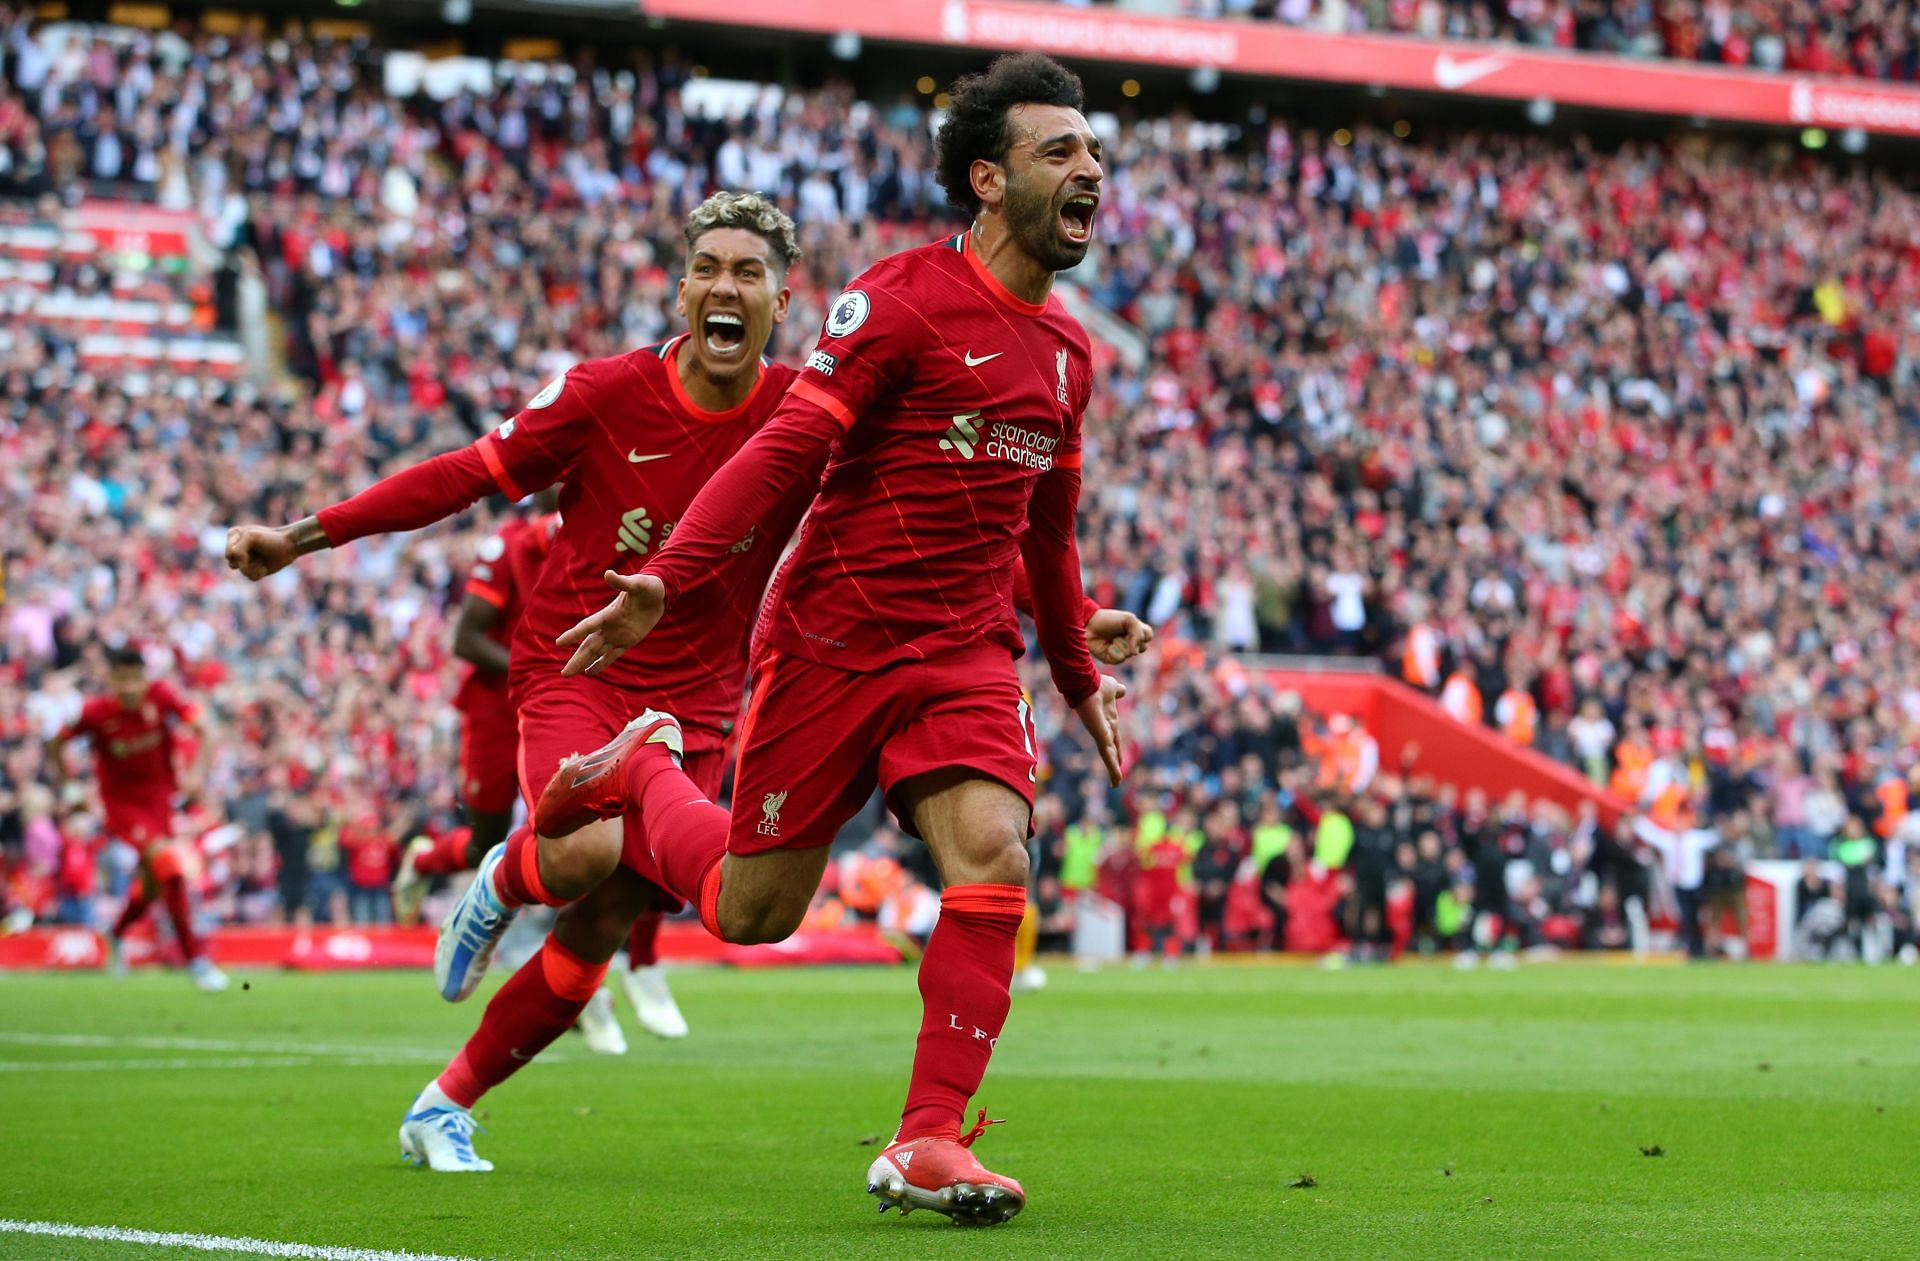 Salah had a terrifc time away from home last season